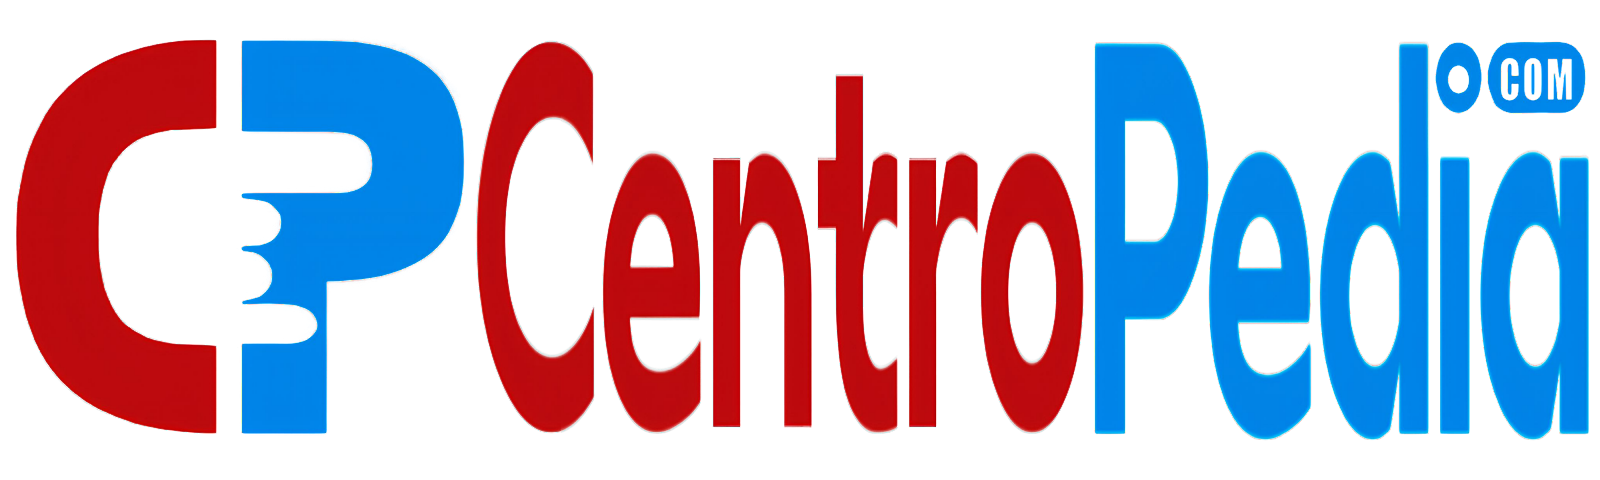 Centropedia